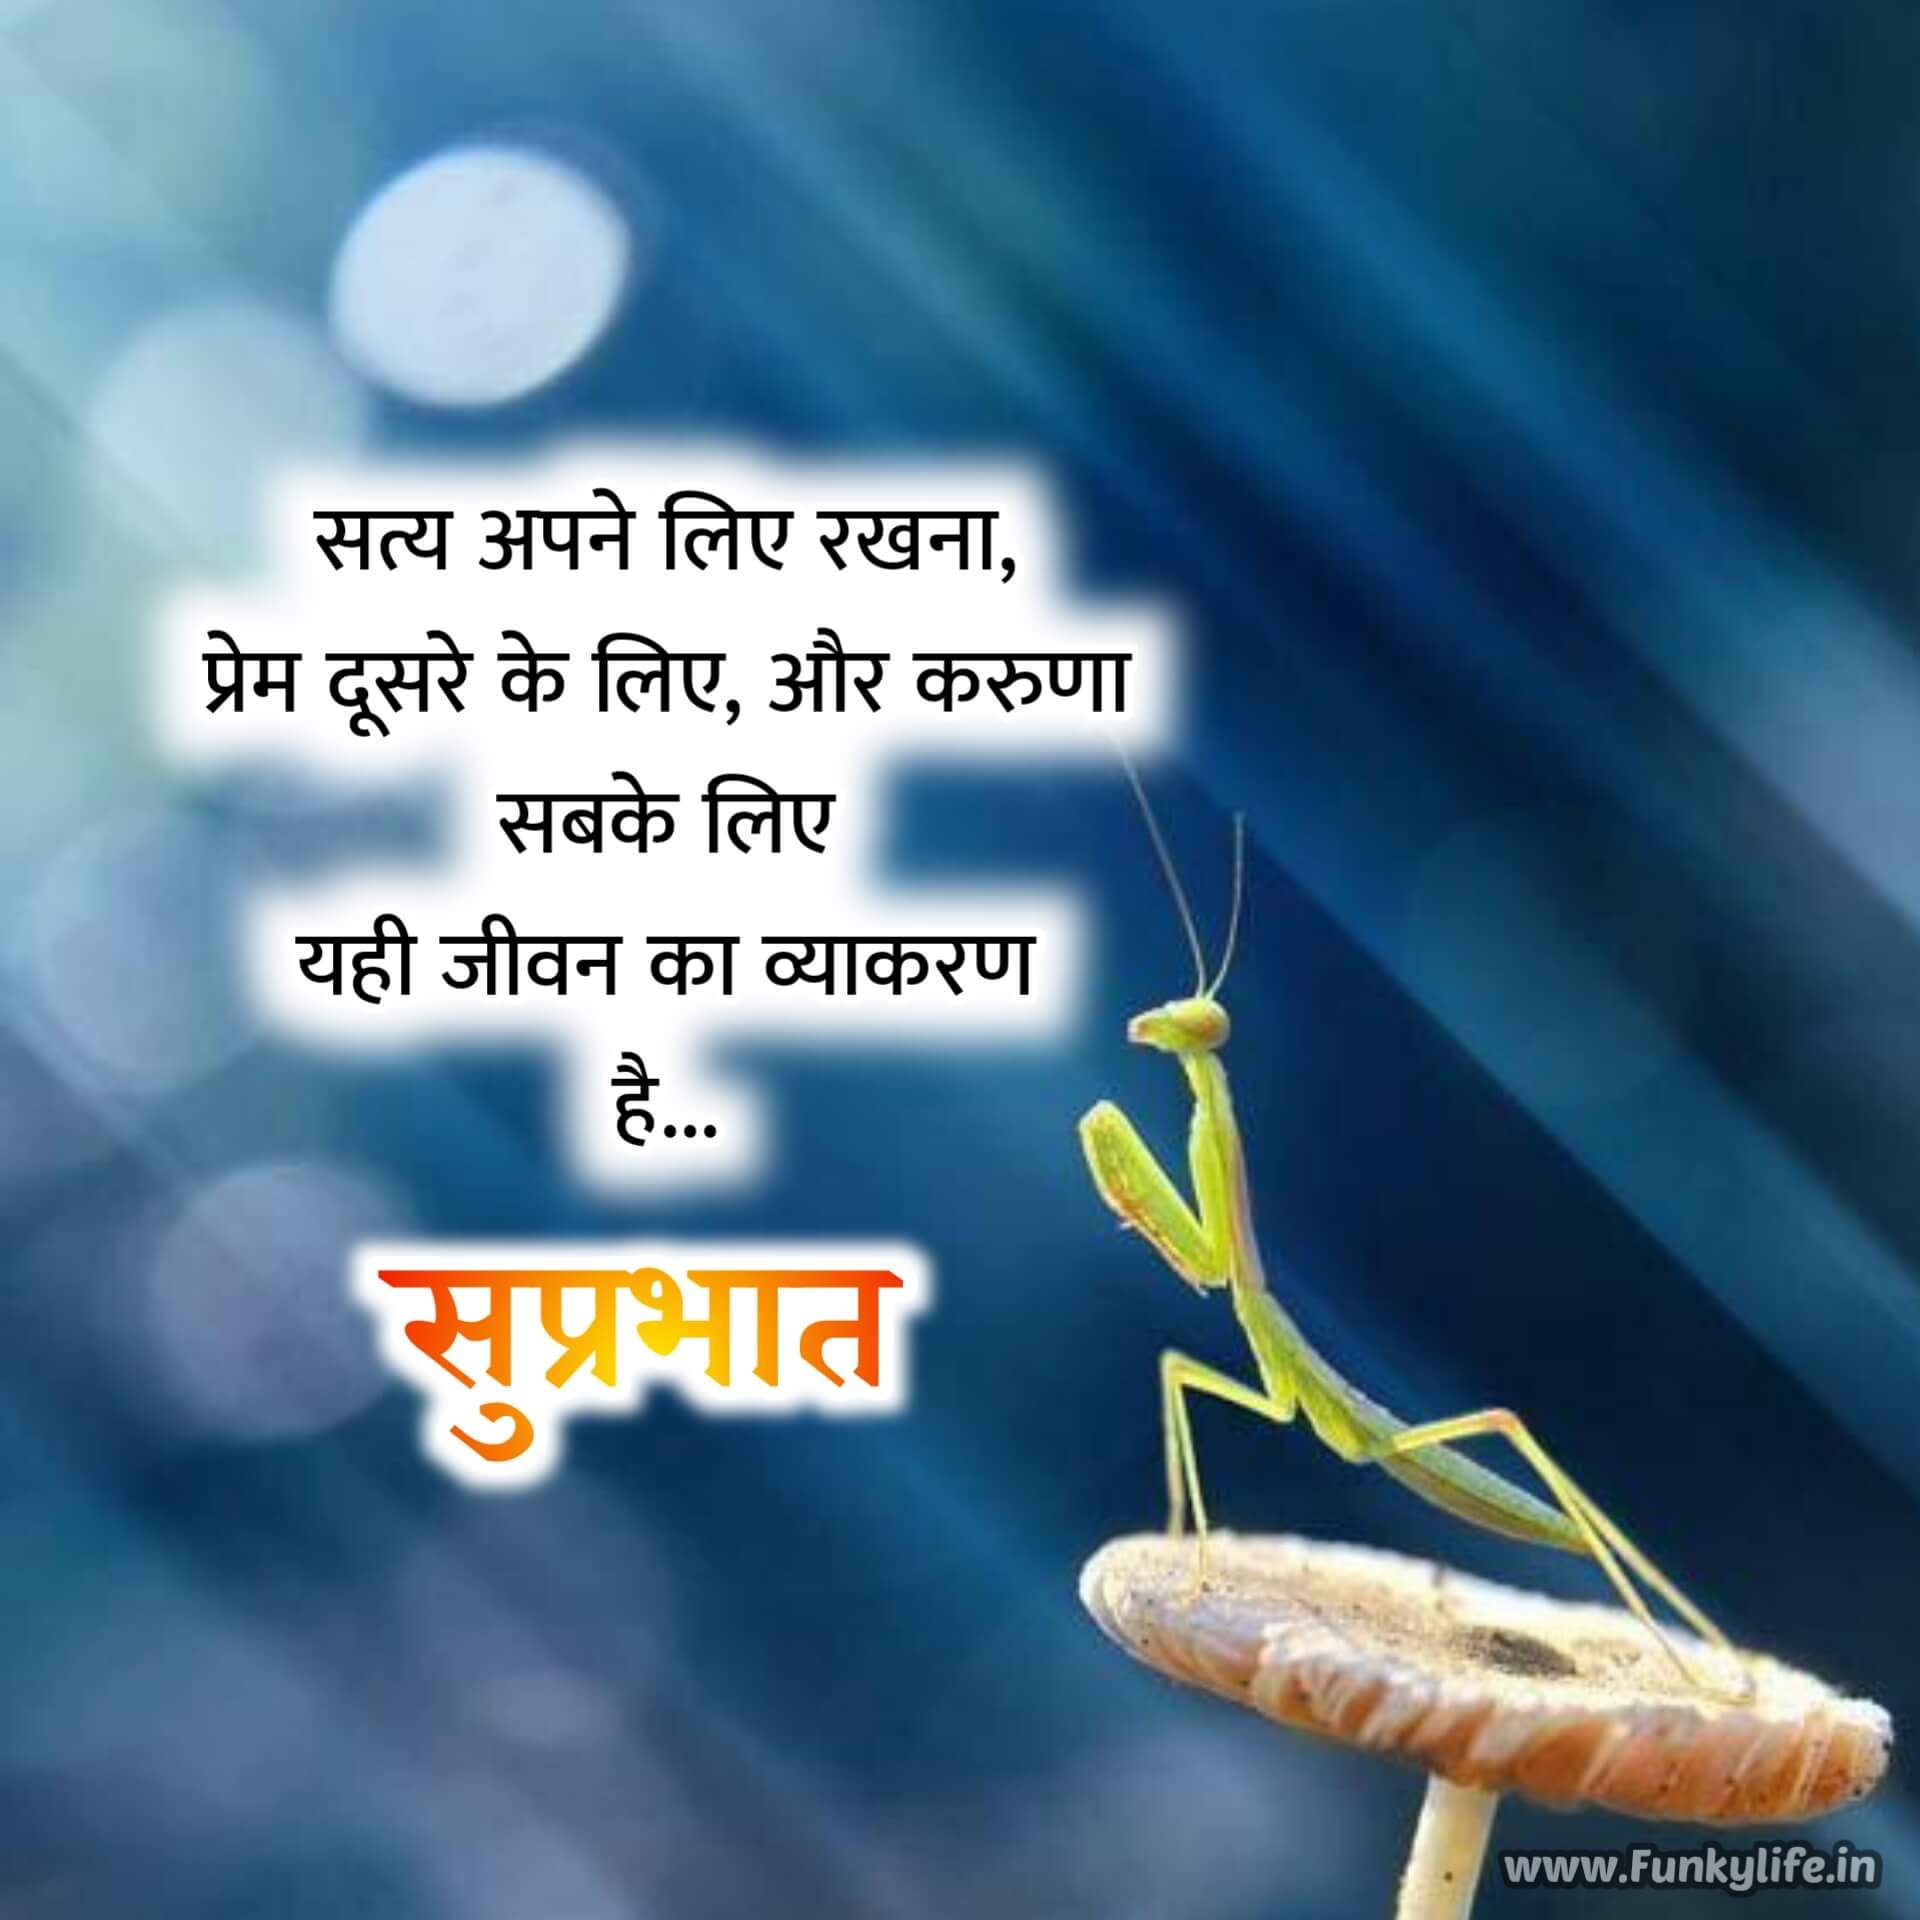 Beautiful Good Morning Quotes in Hindi